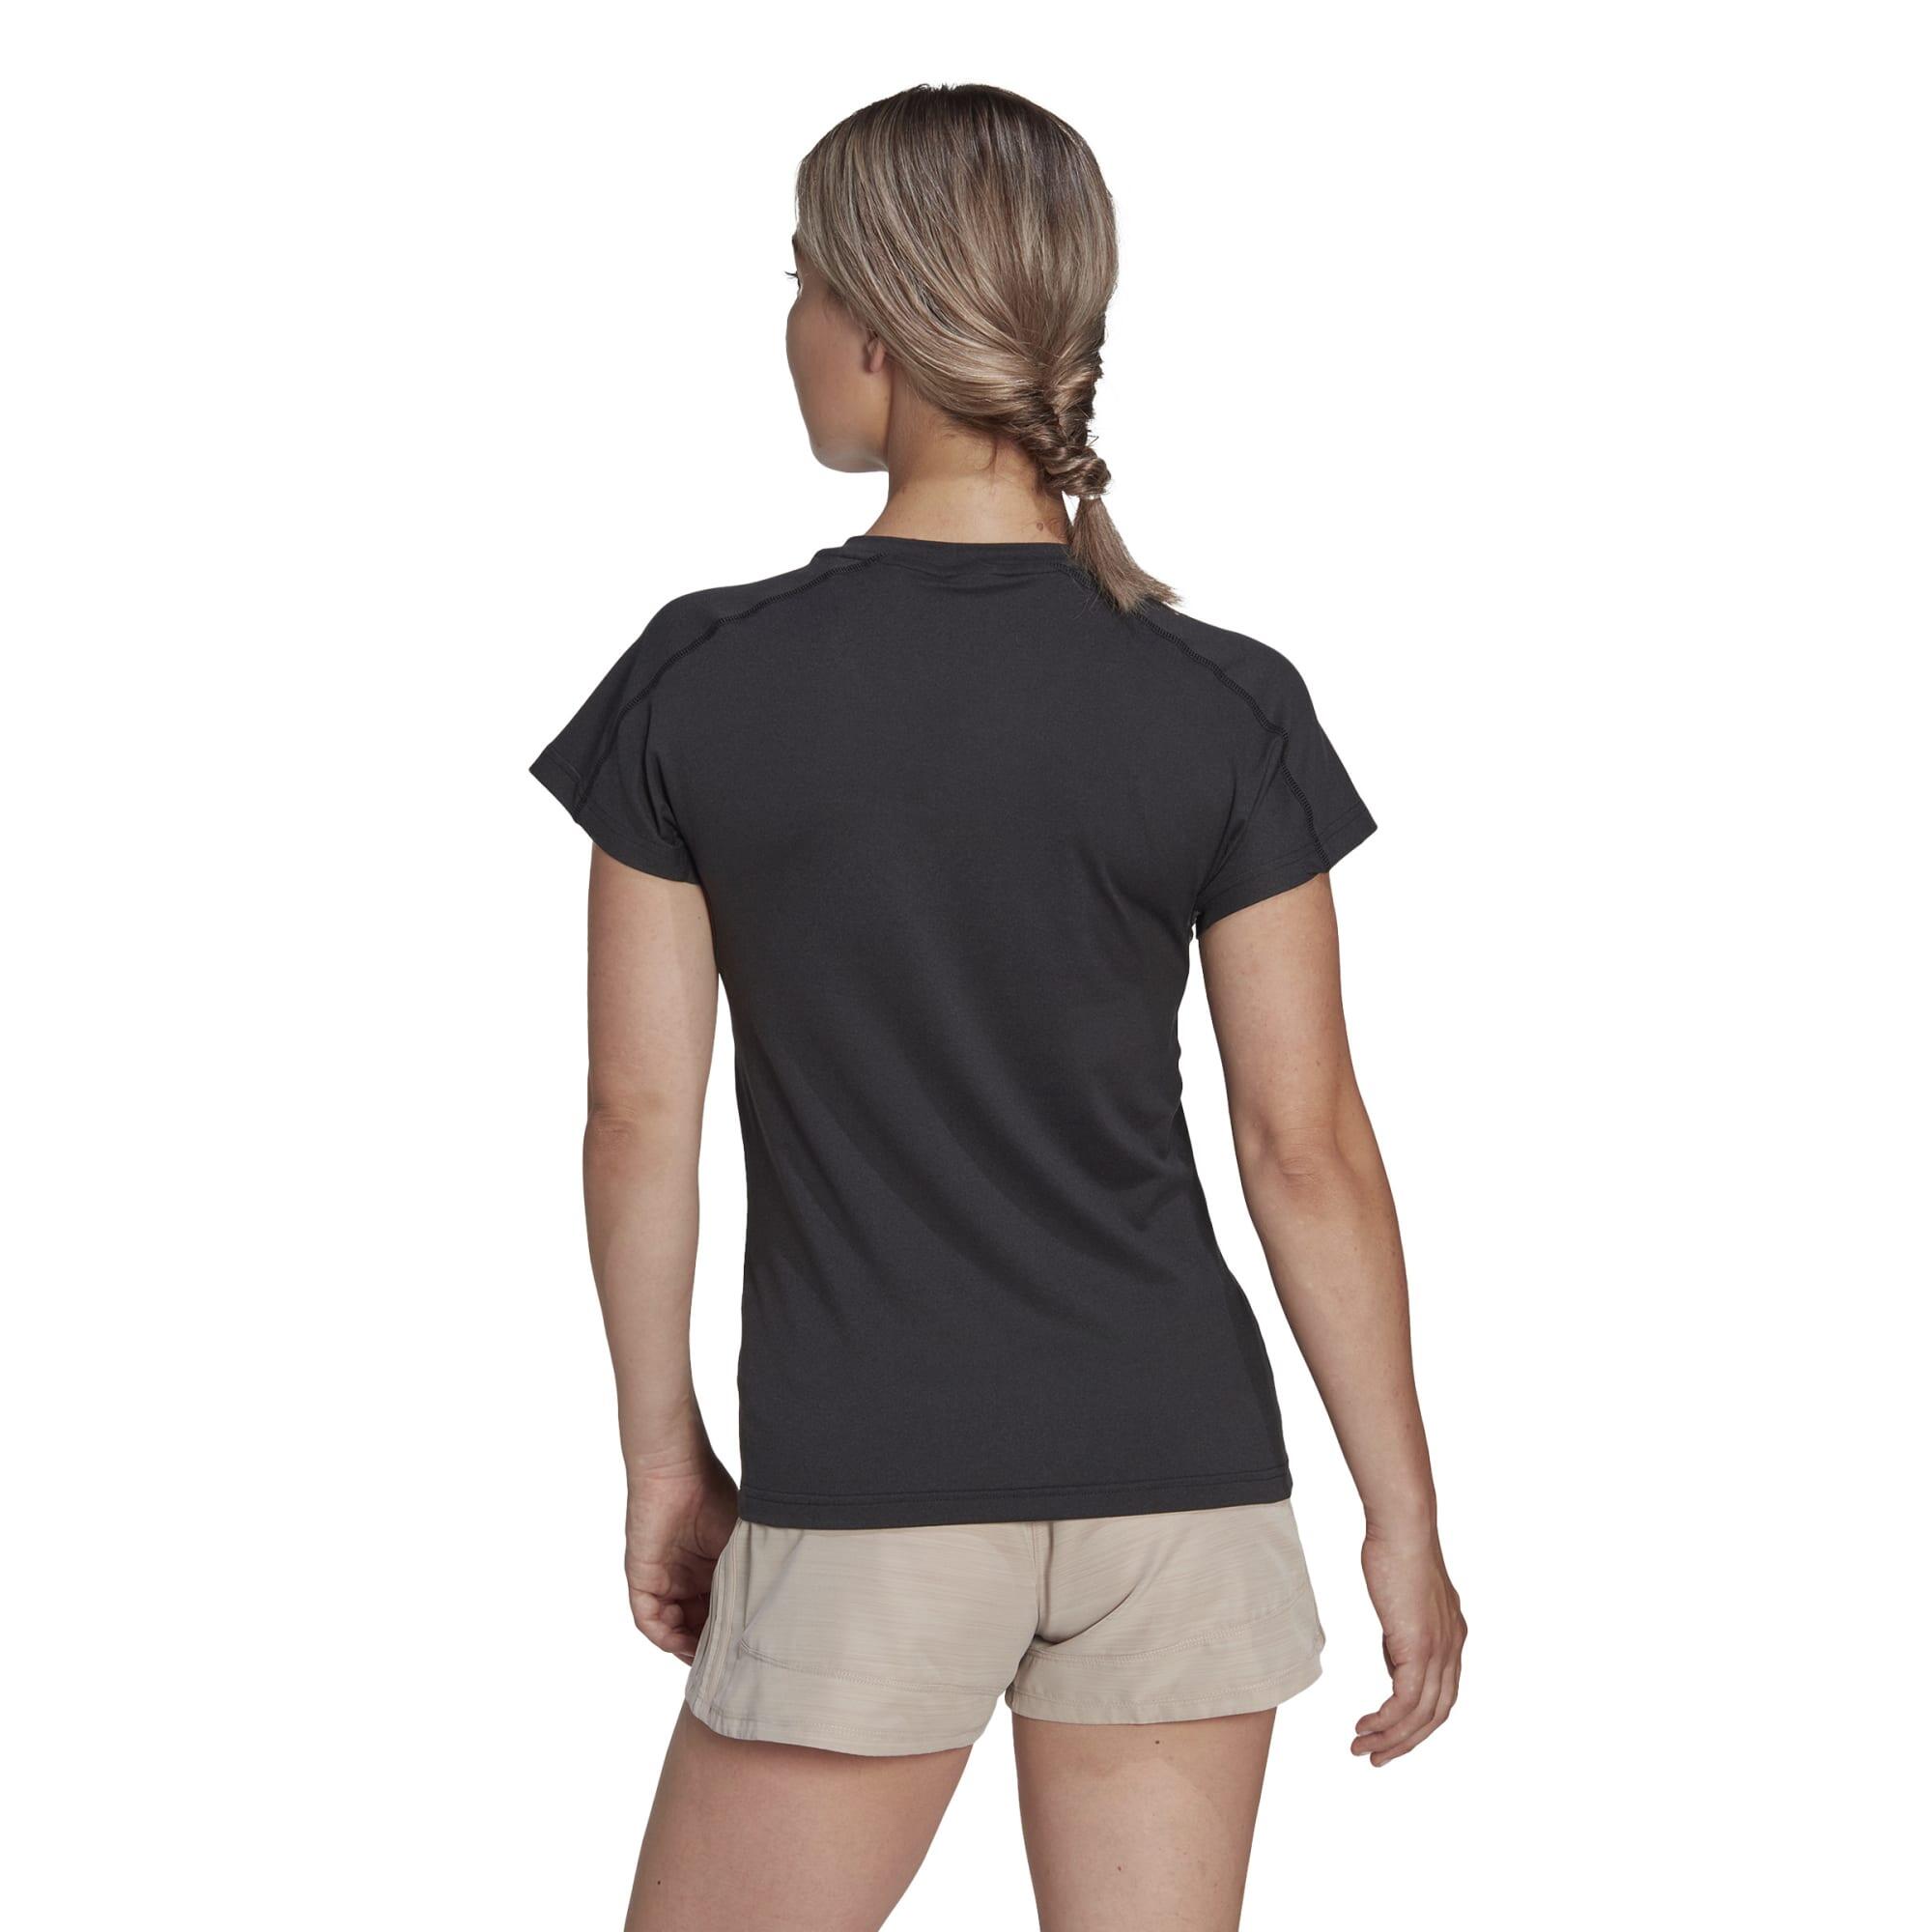 Women's Cardio Fitness T-Shirt - Black 4/5